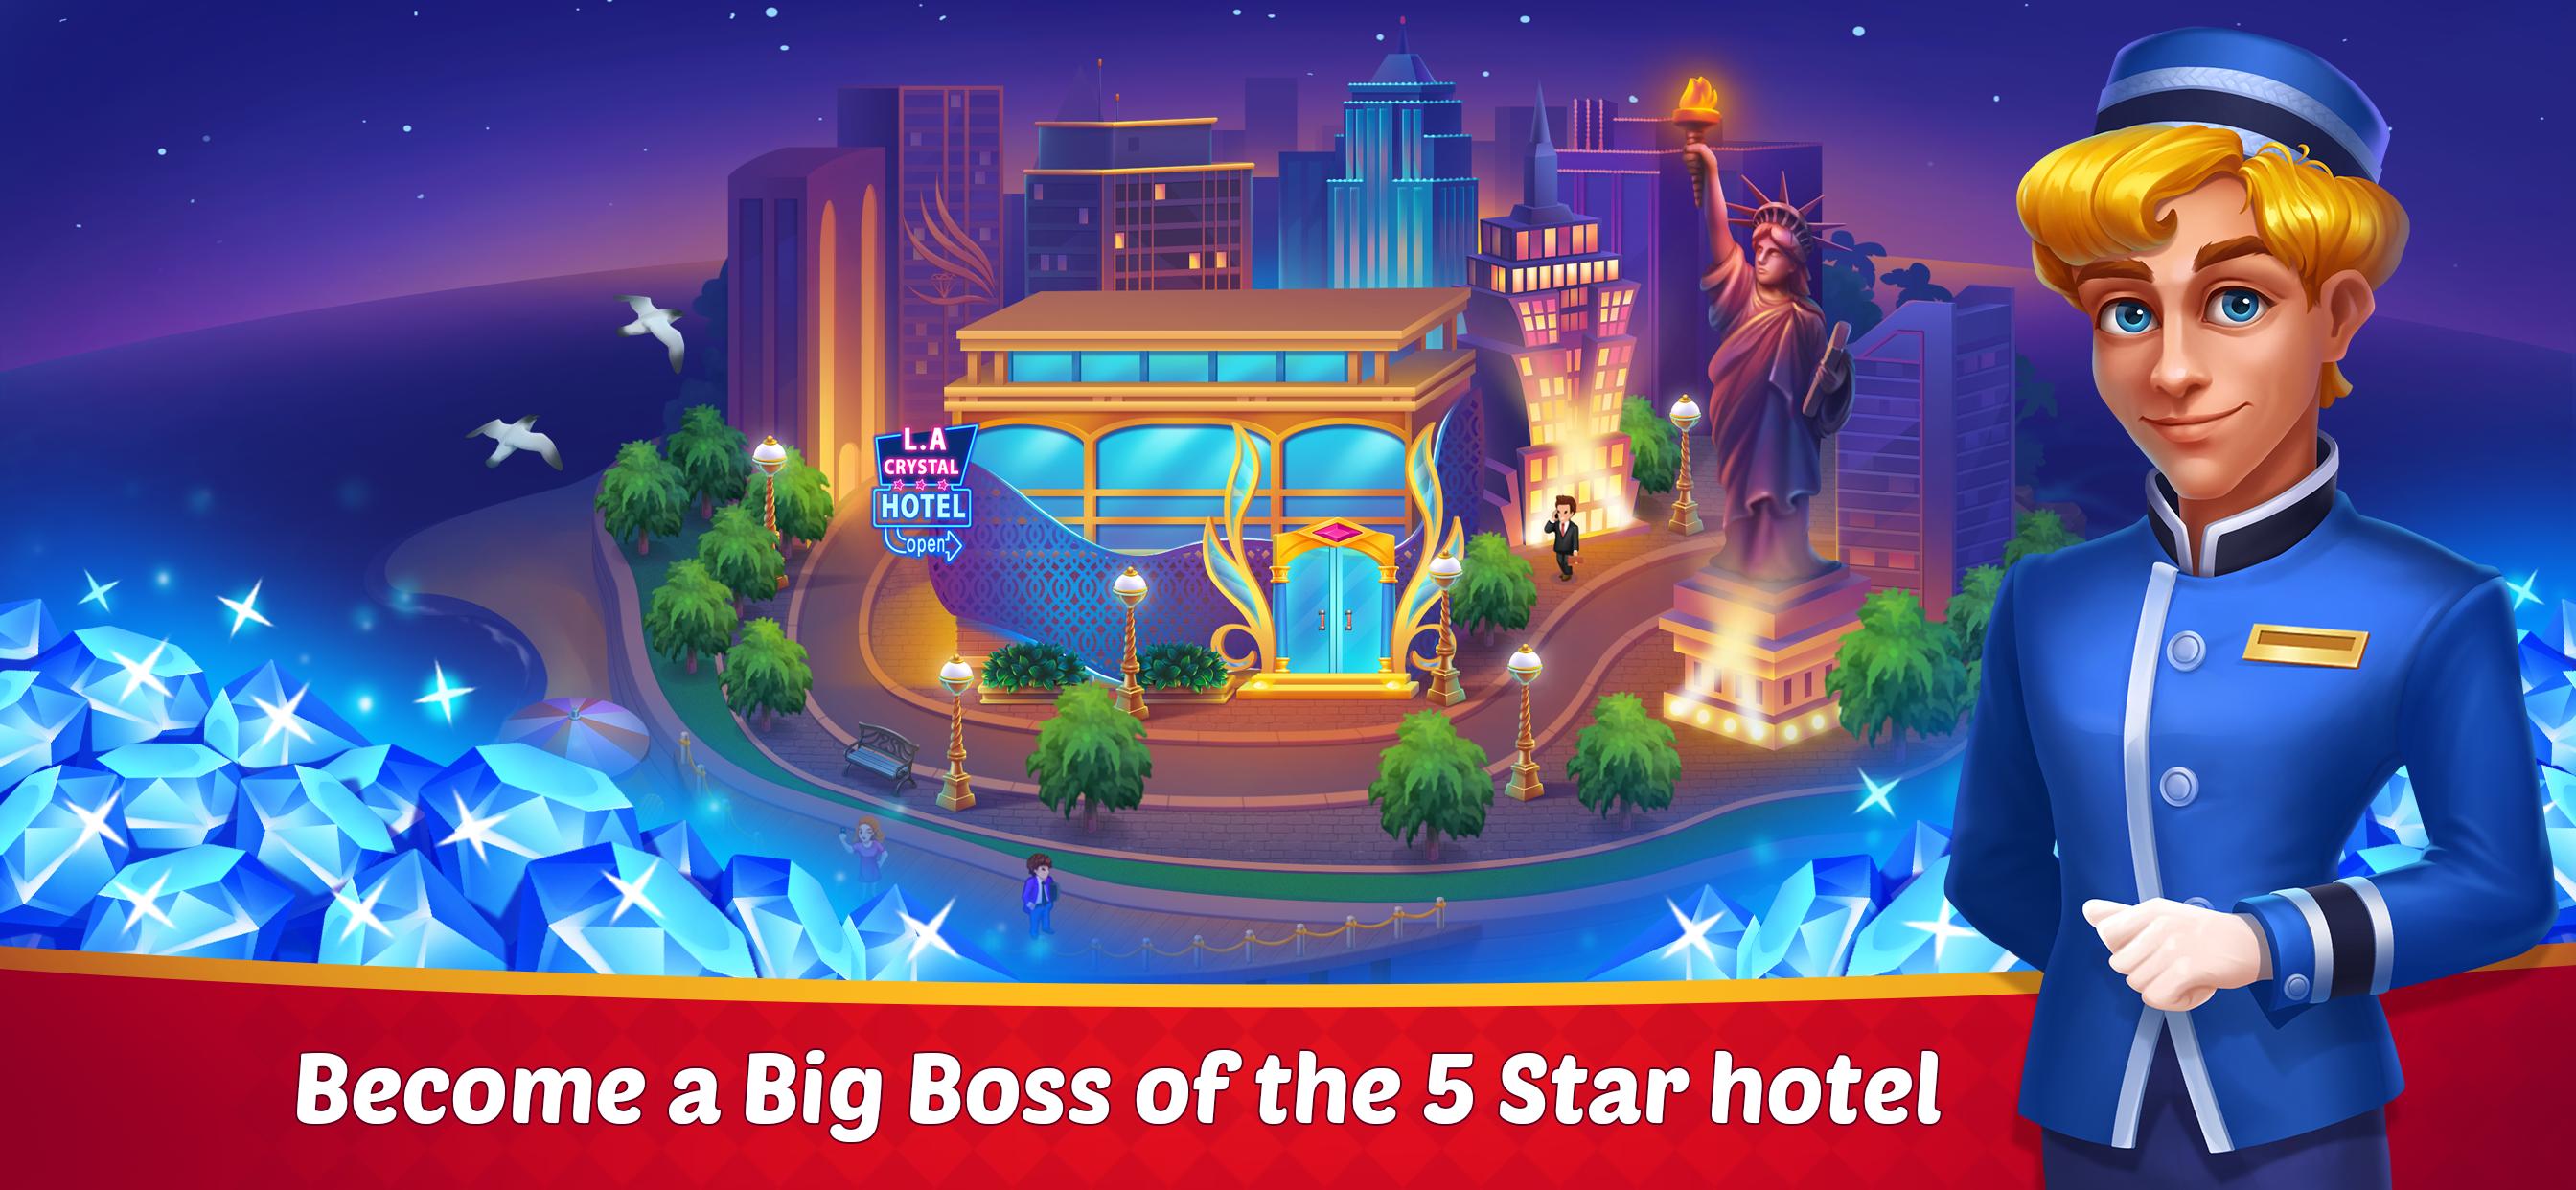 Dream Hotel Hotel Manager Simulation games 1.2.4 Screenshot 15